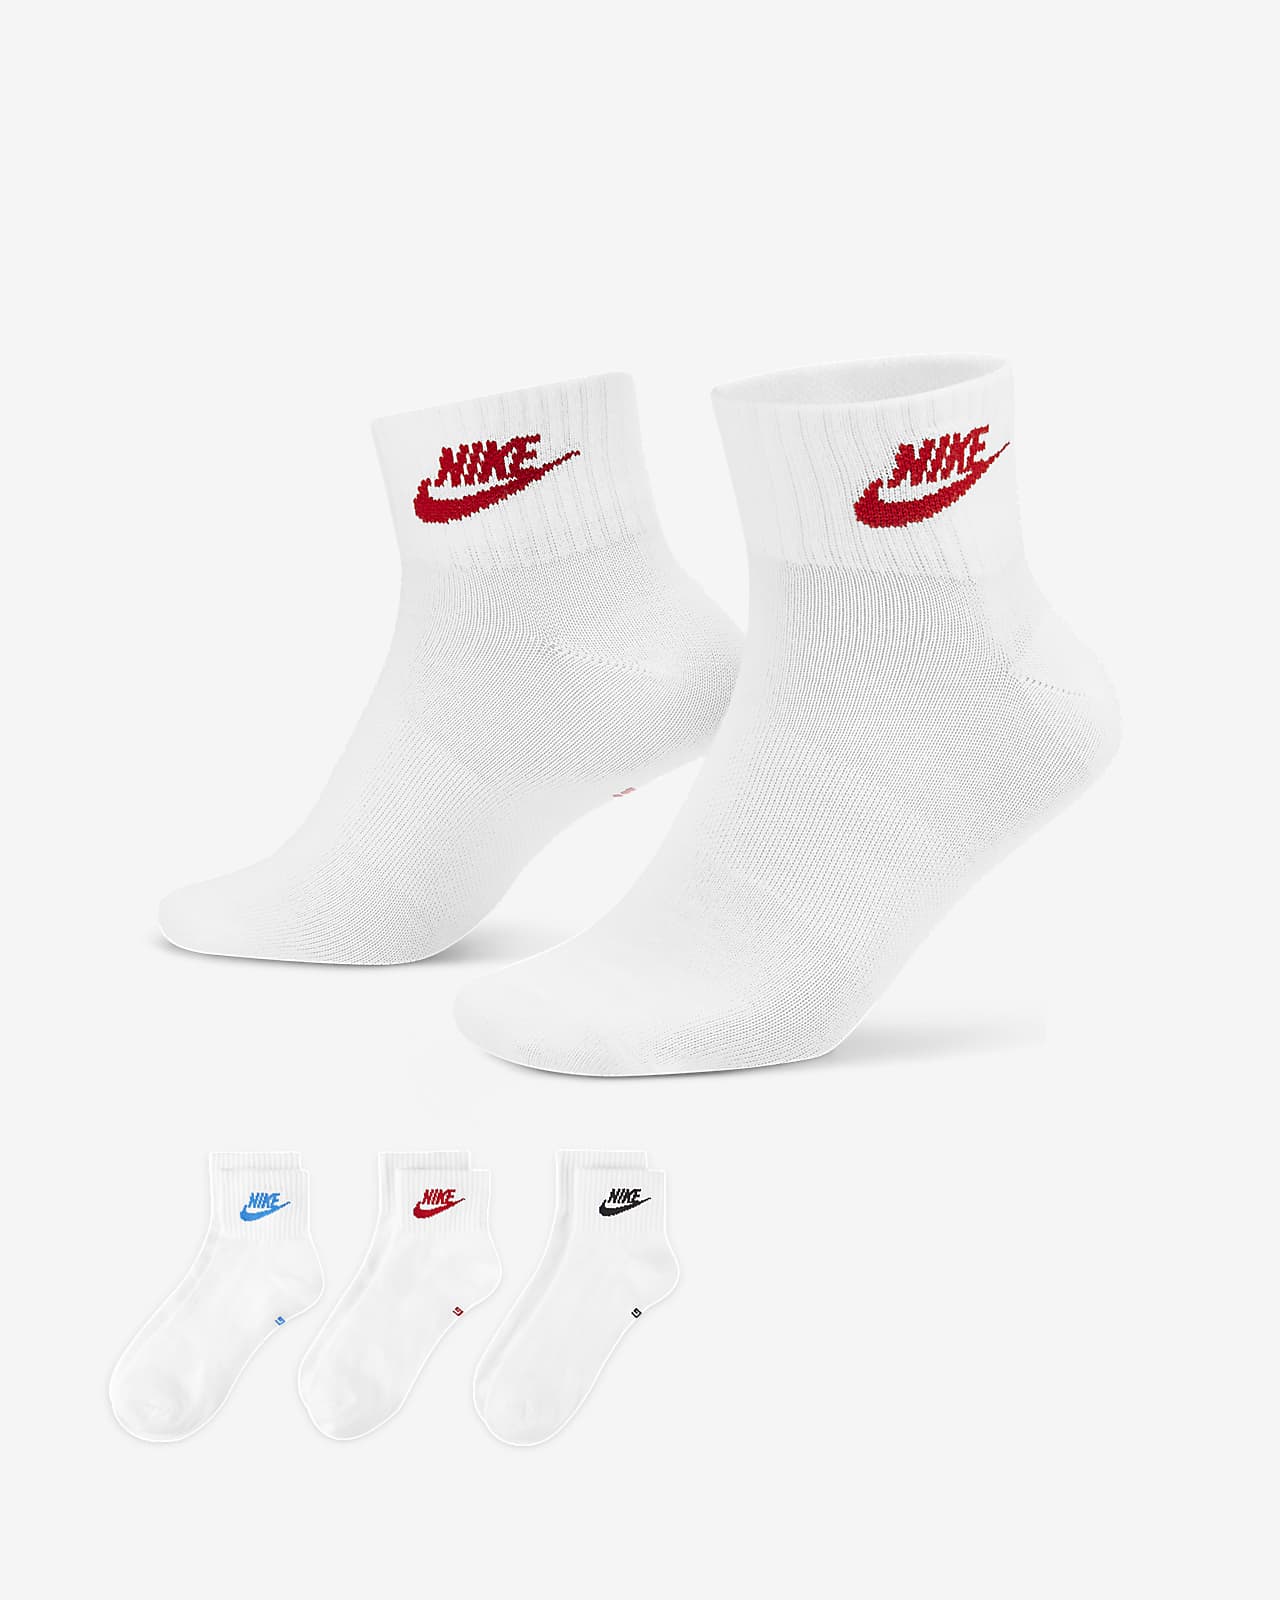 Socquettes Nike Everyday Essential (3 paires)